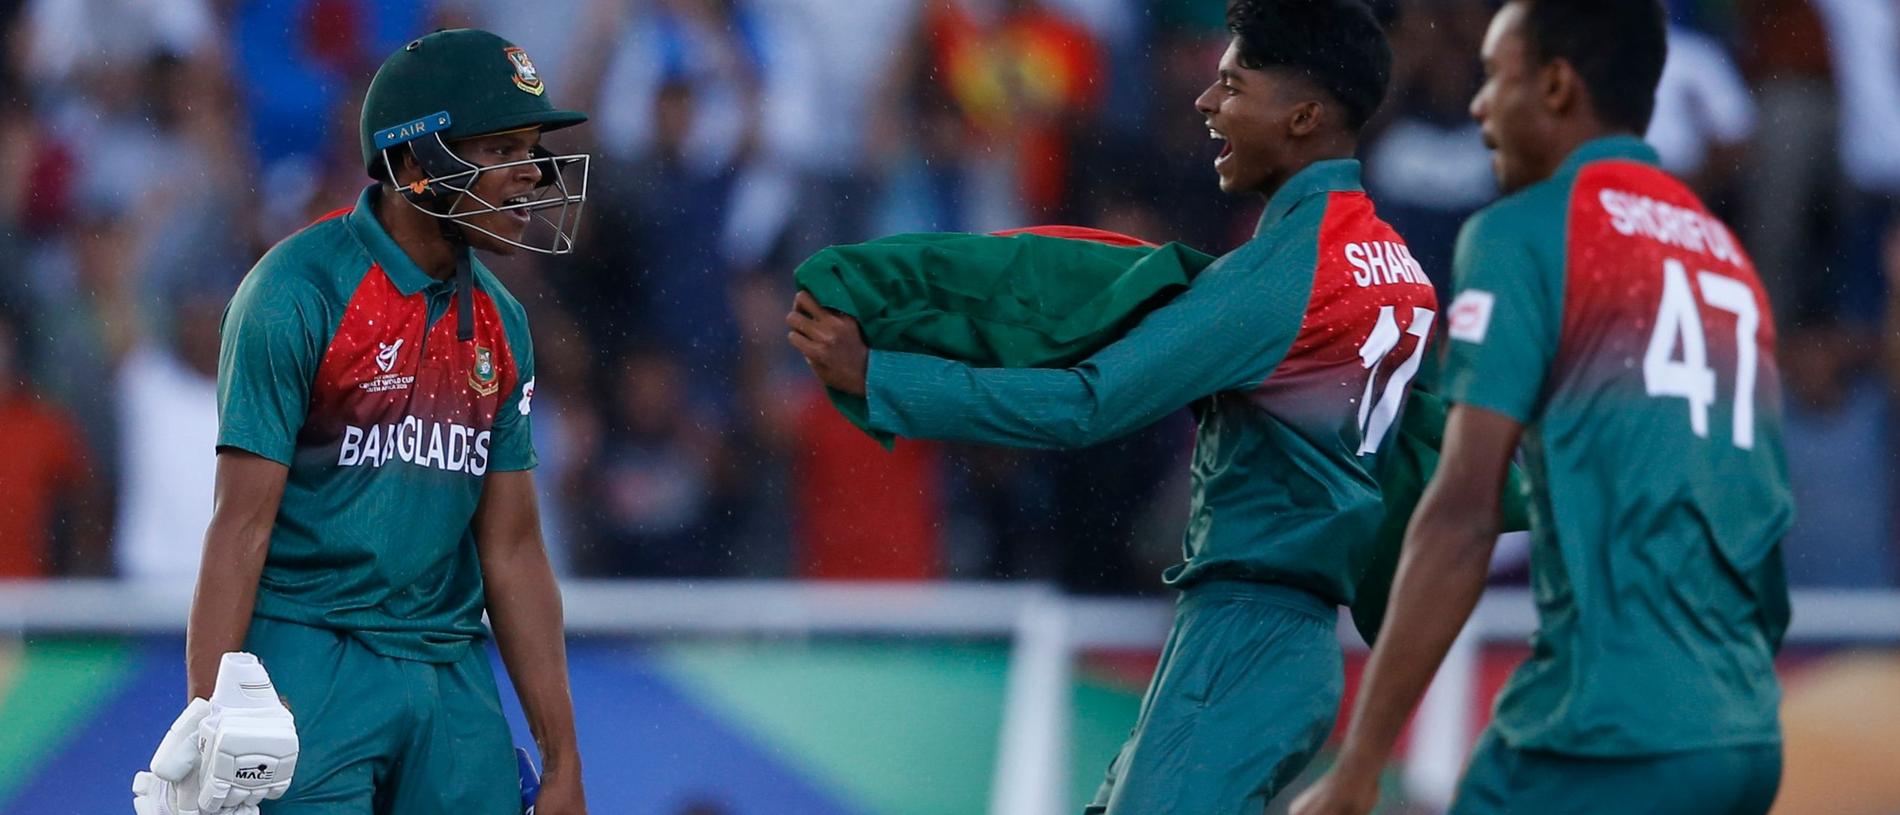 Under 19 Cricket World Cup India Vs Bangladesh Match Report Video Highlights